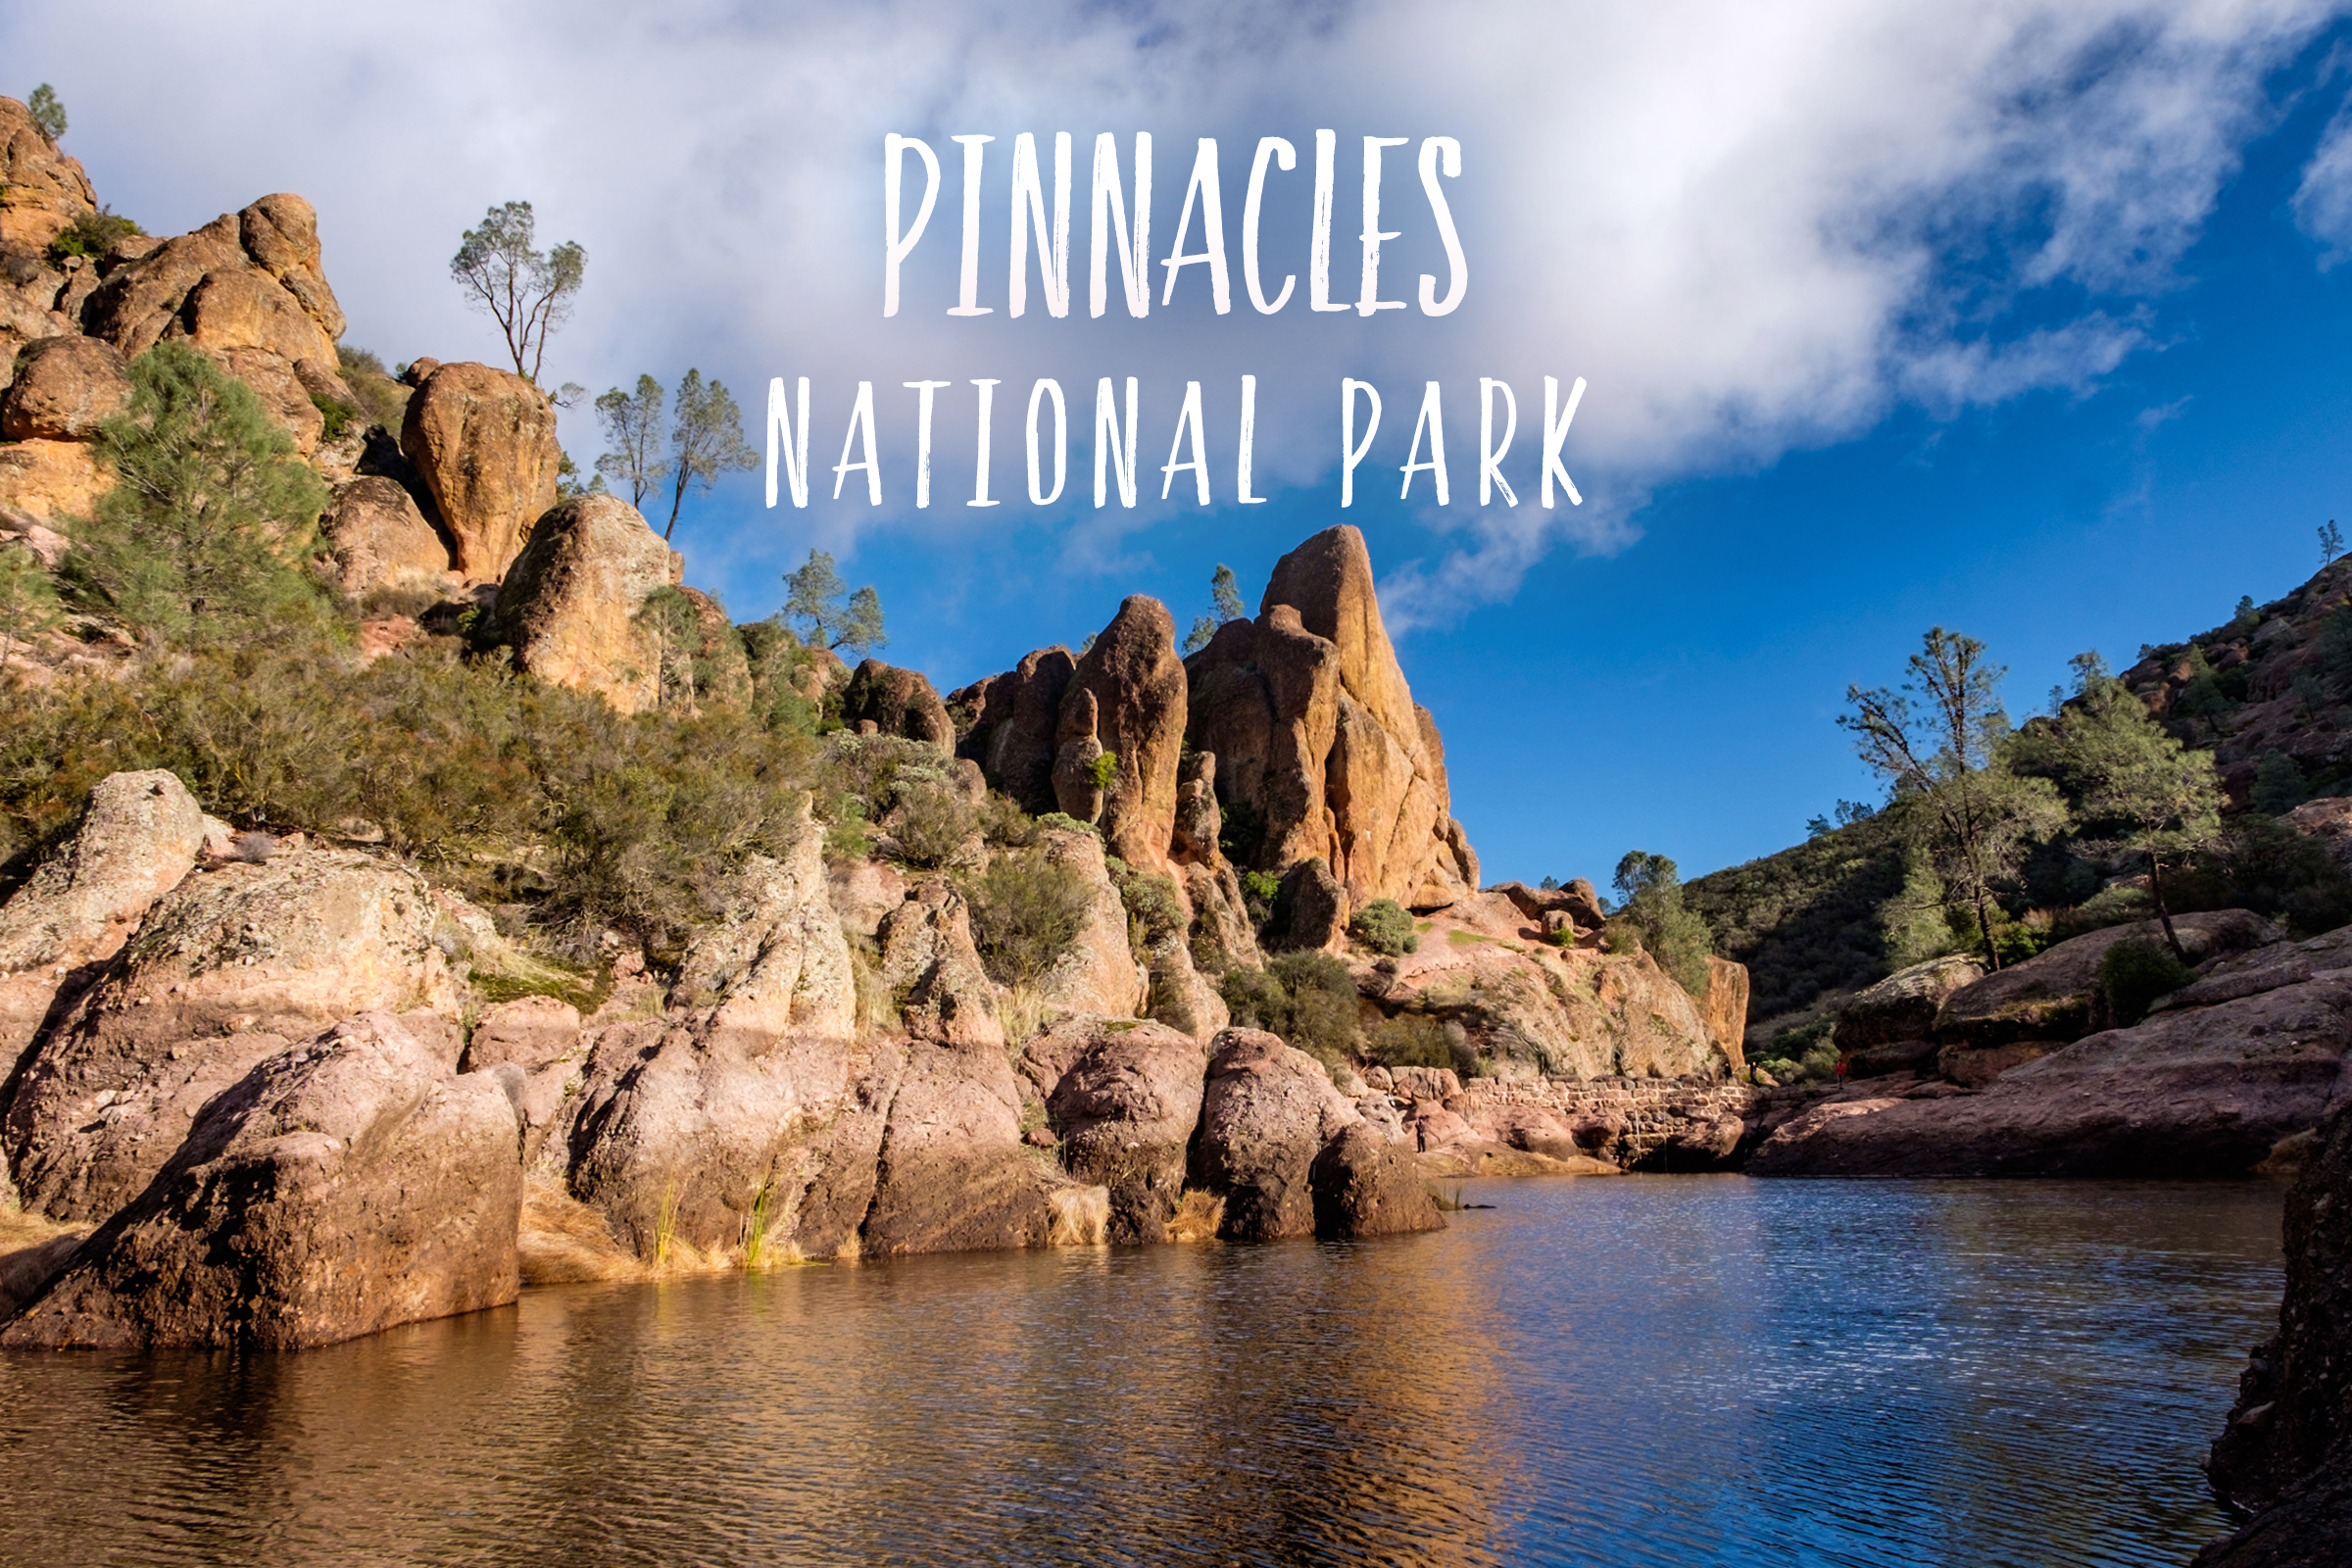 Park 59/59: Pinnacles National Park in California